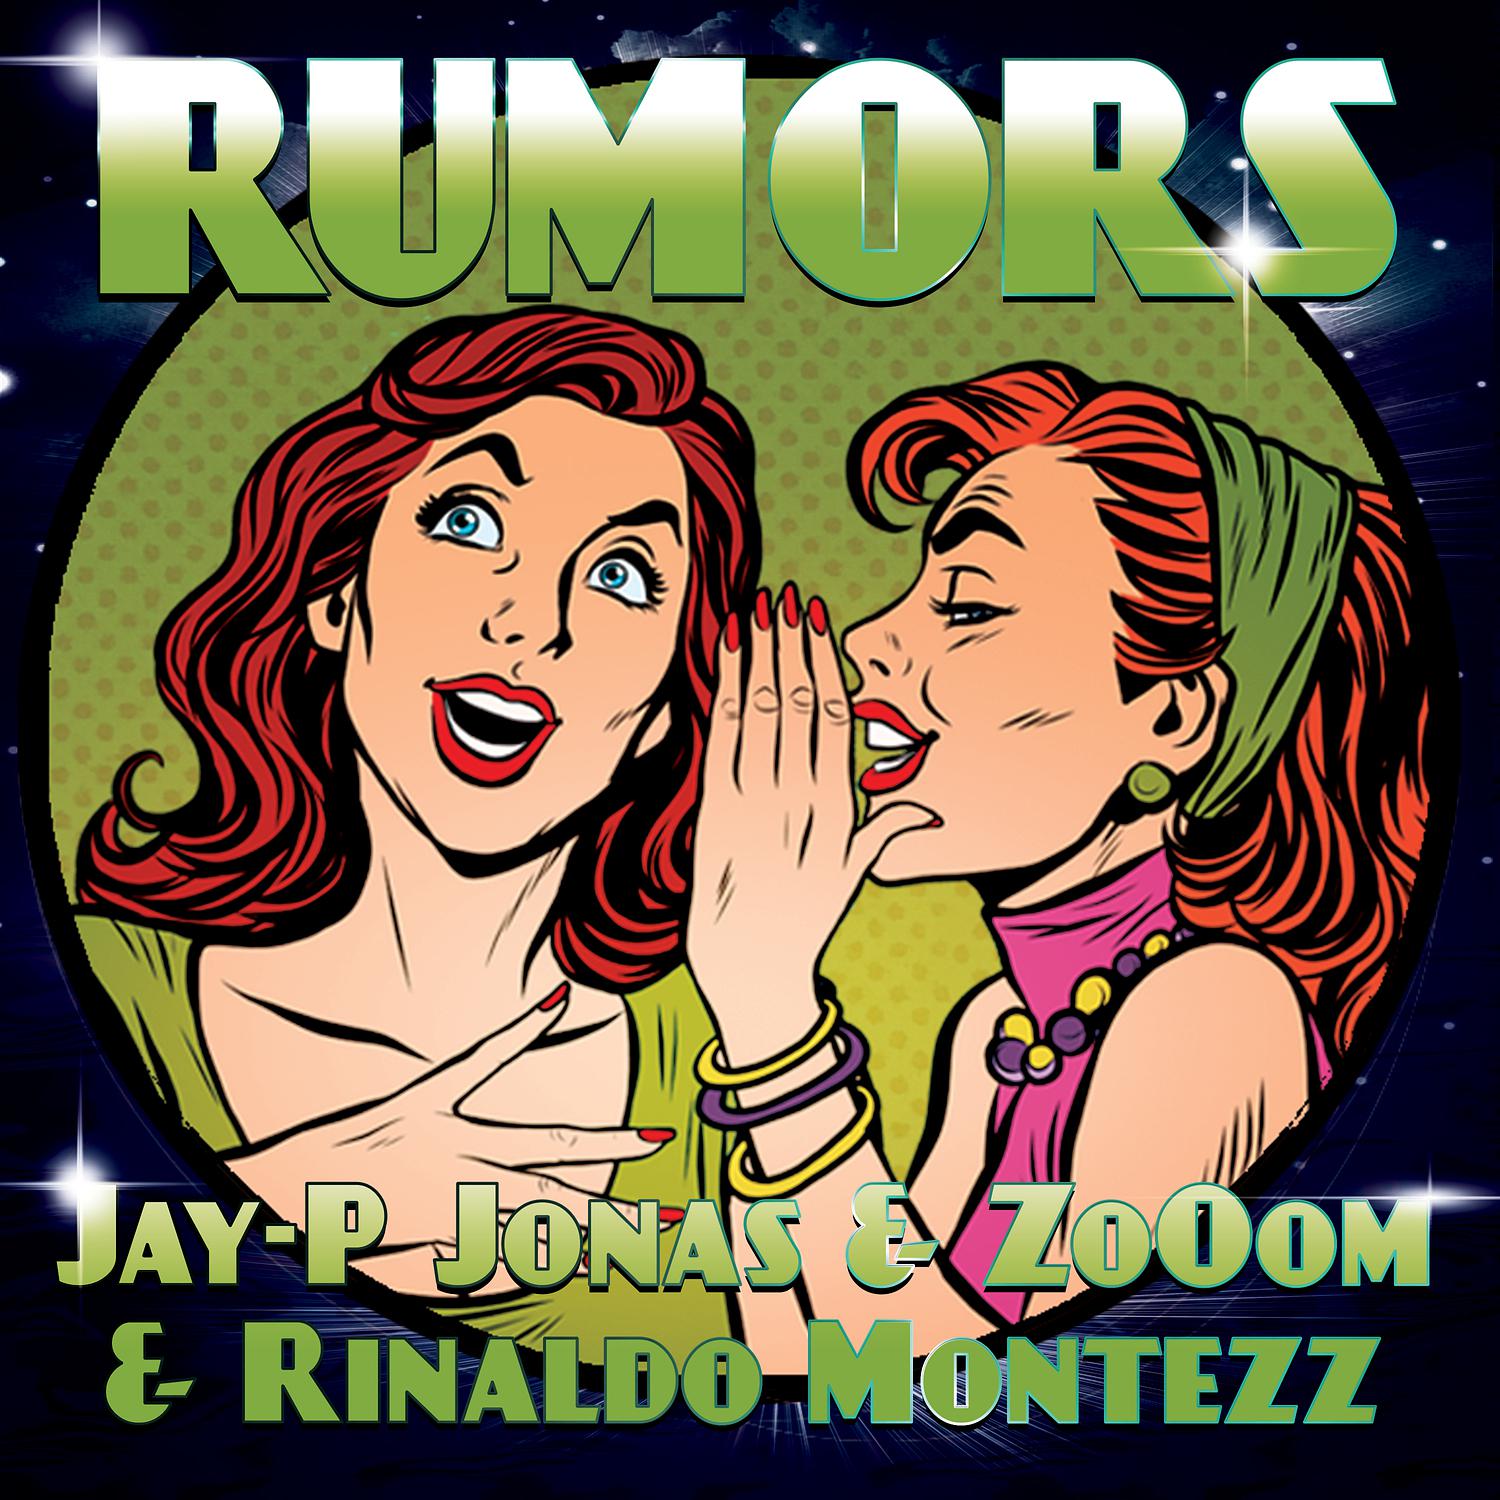 Jay-P Jonas - Rumors - Extended Mix